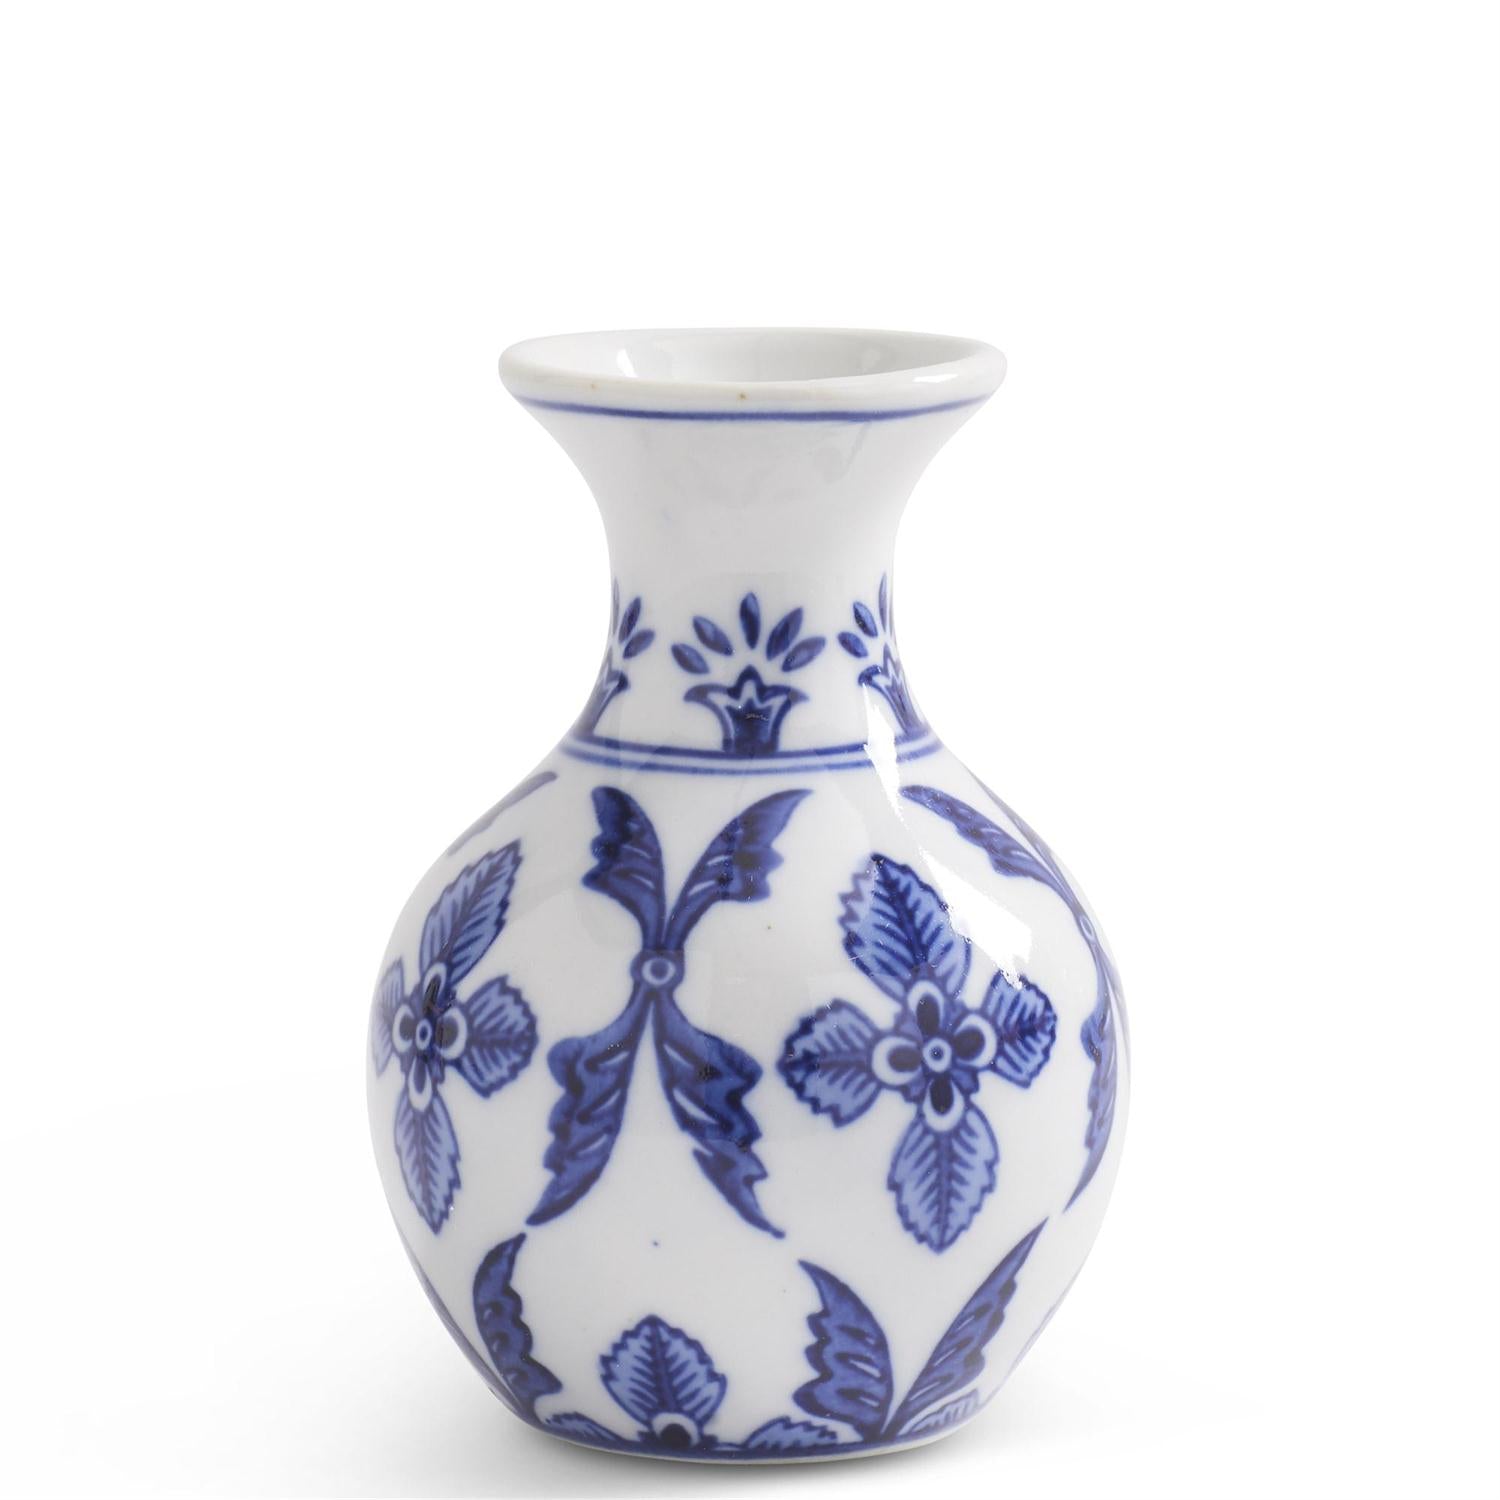 Delft-Inspired Porcelain Bud Vases